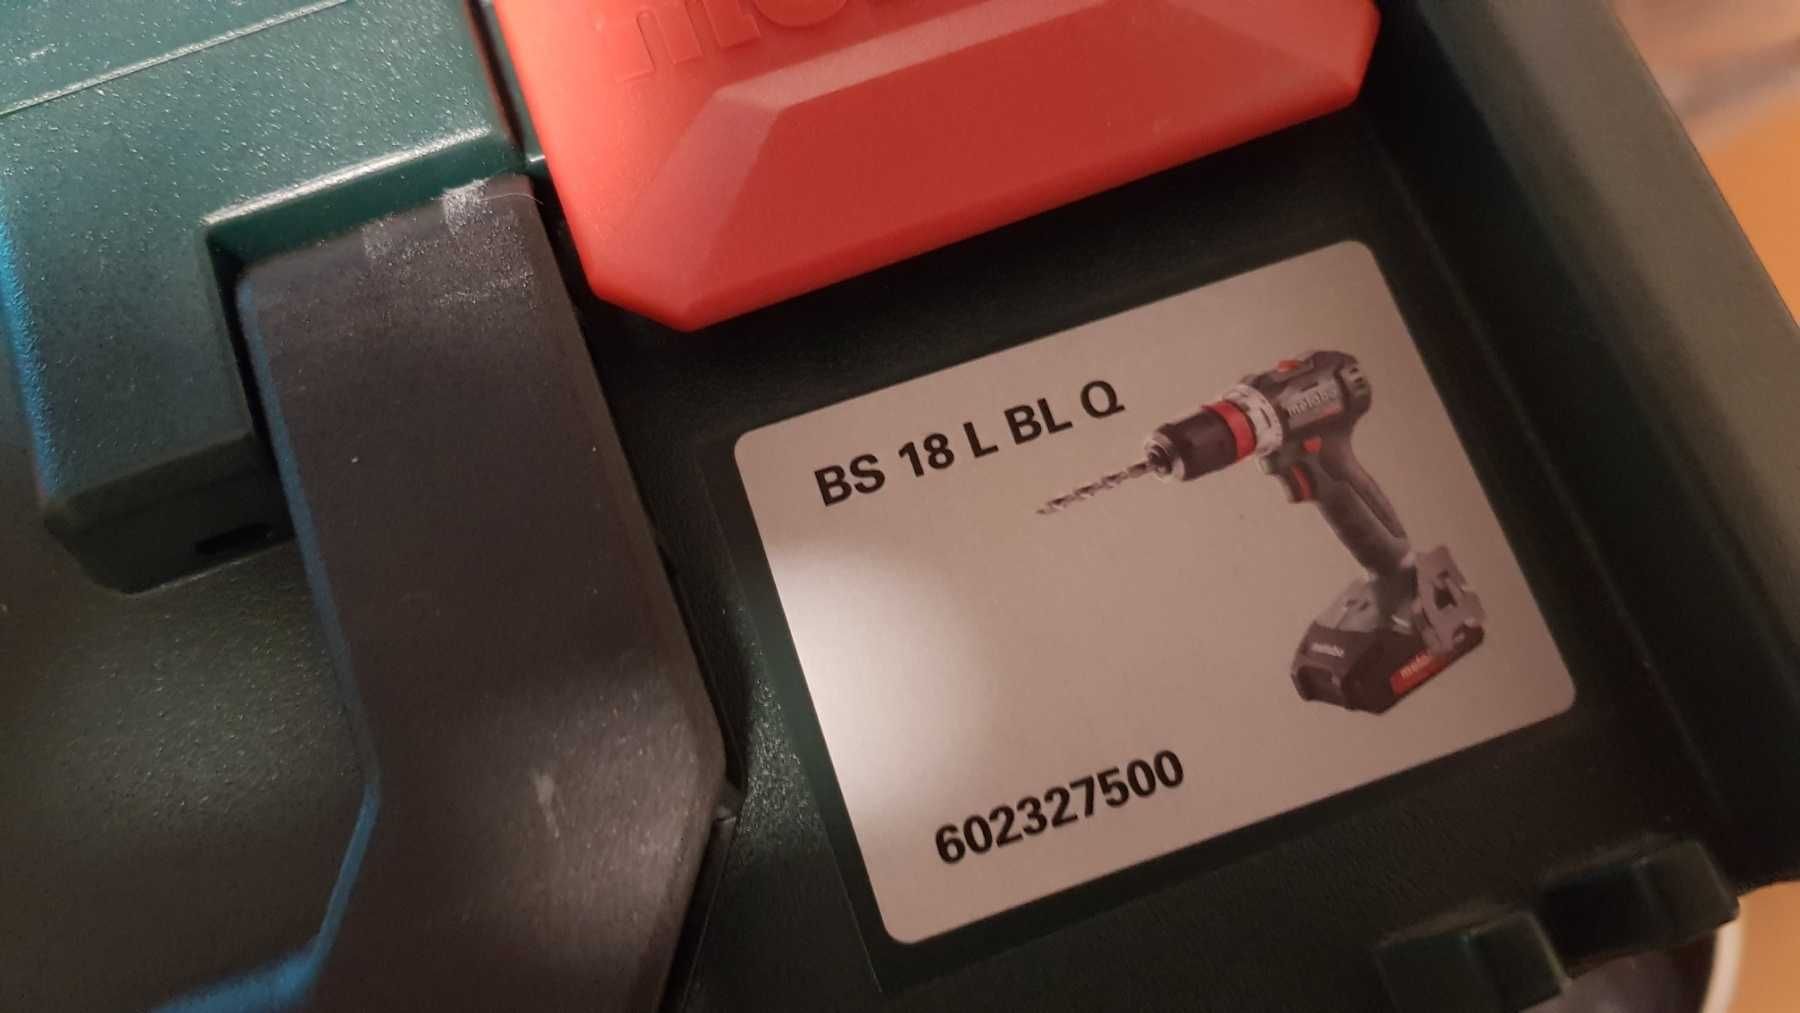 Аккумуляторный шуруповерт Metabo BS 18 L BL Q